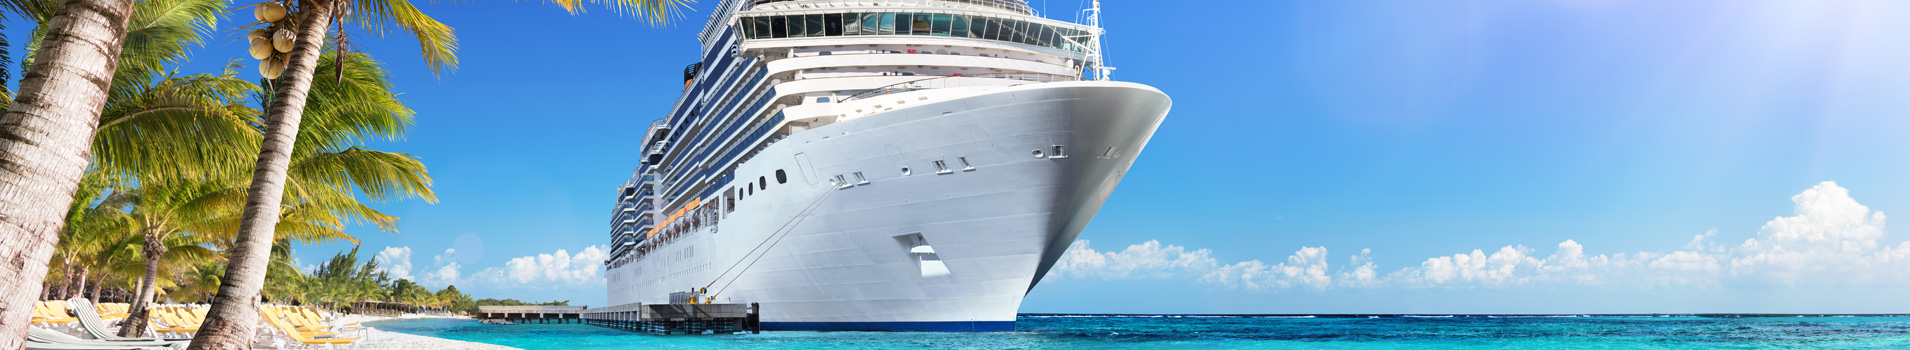 Get The Best Ocean Cruise Deals